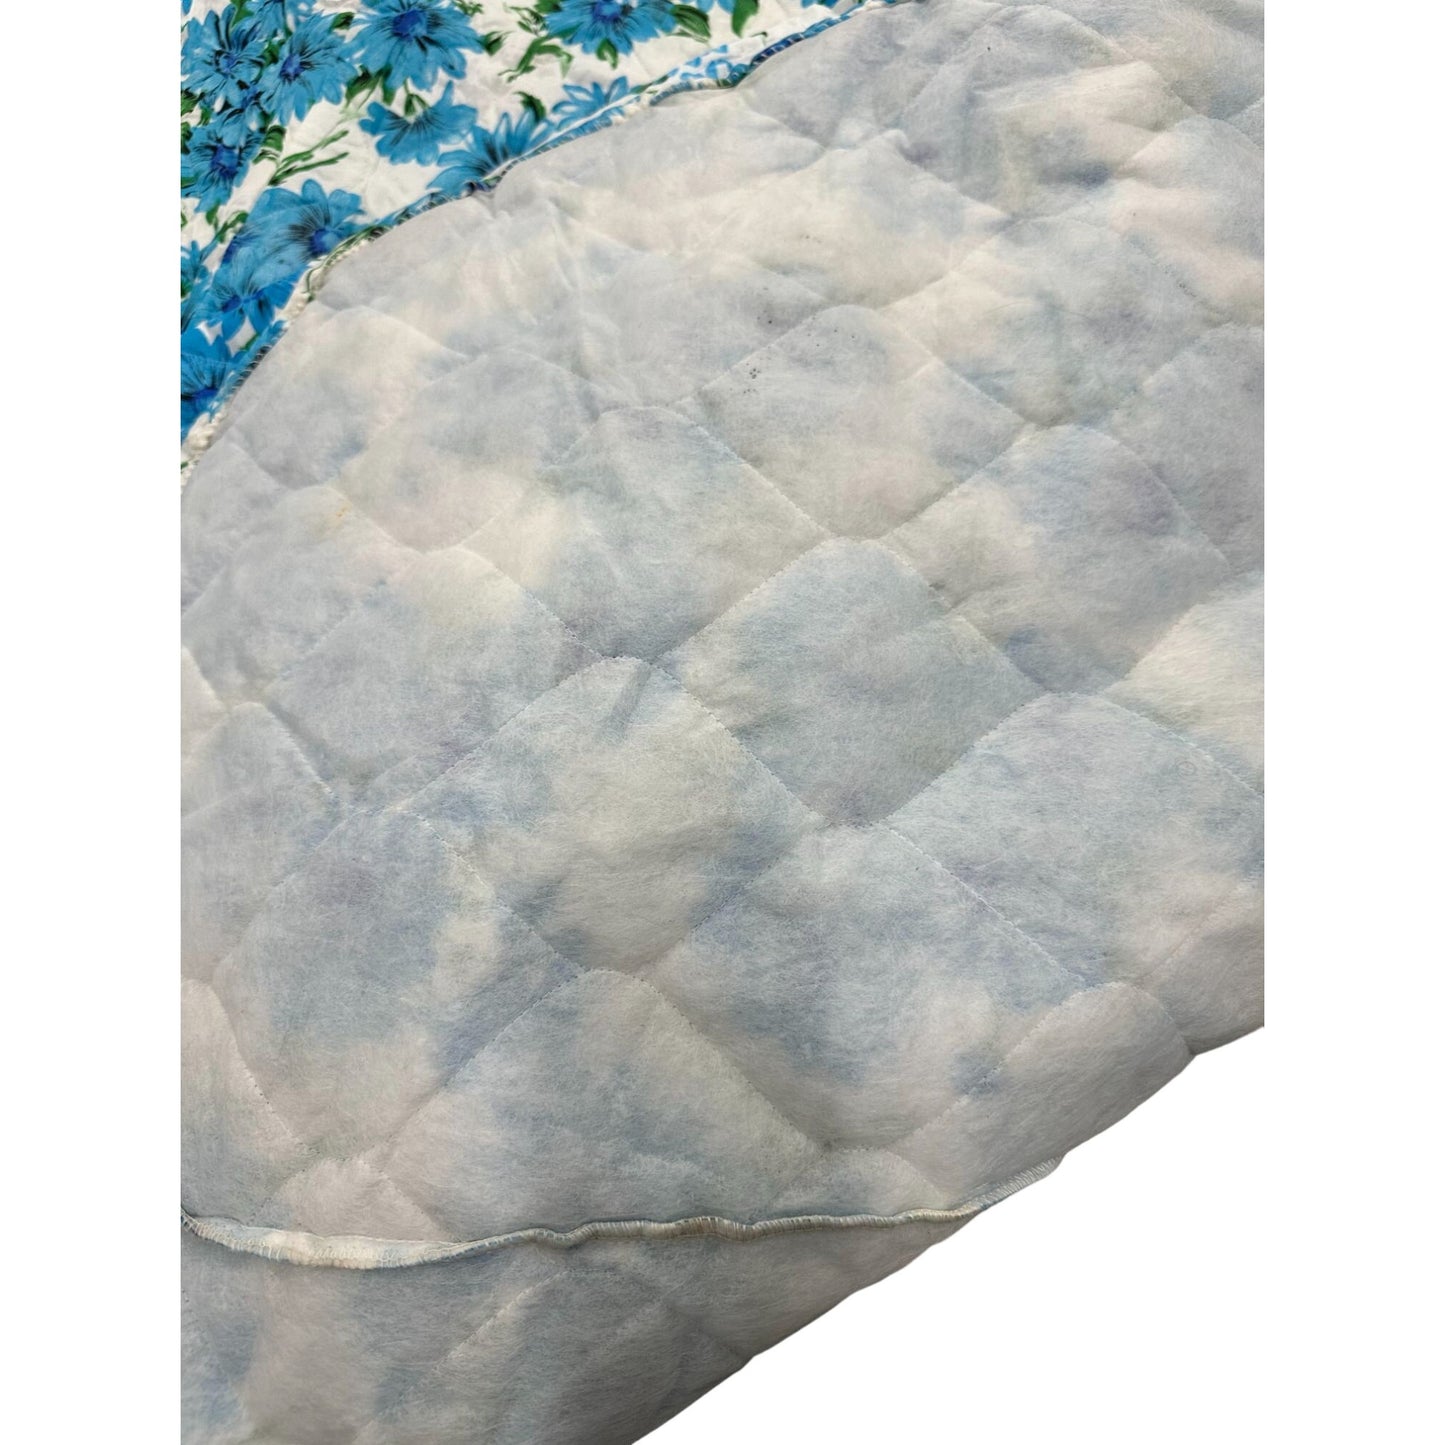 White Blue Floral Bedspread 19" x 10" Timeless Elegance for Your Bedroom Décor